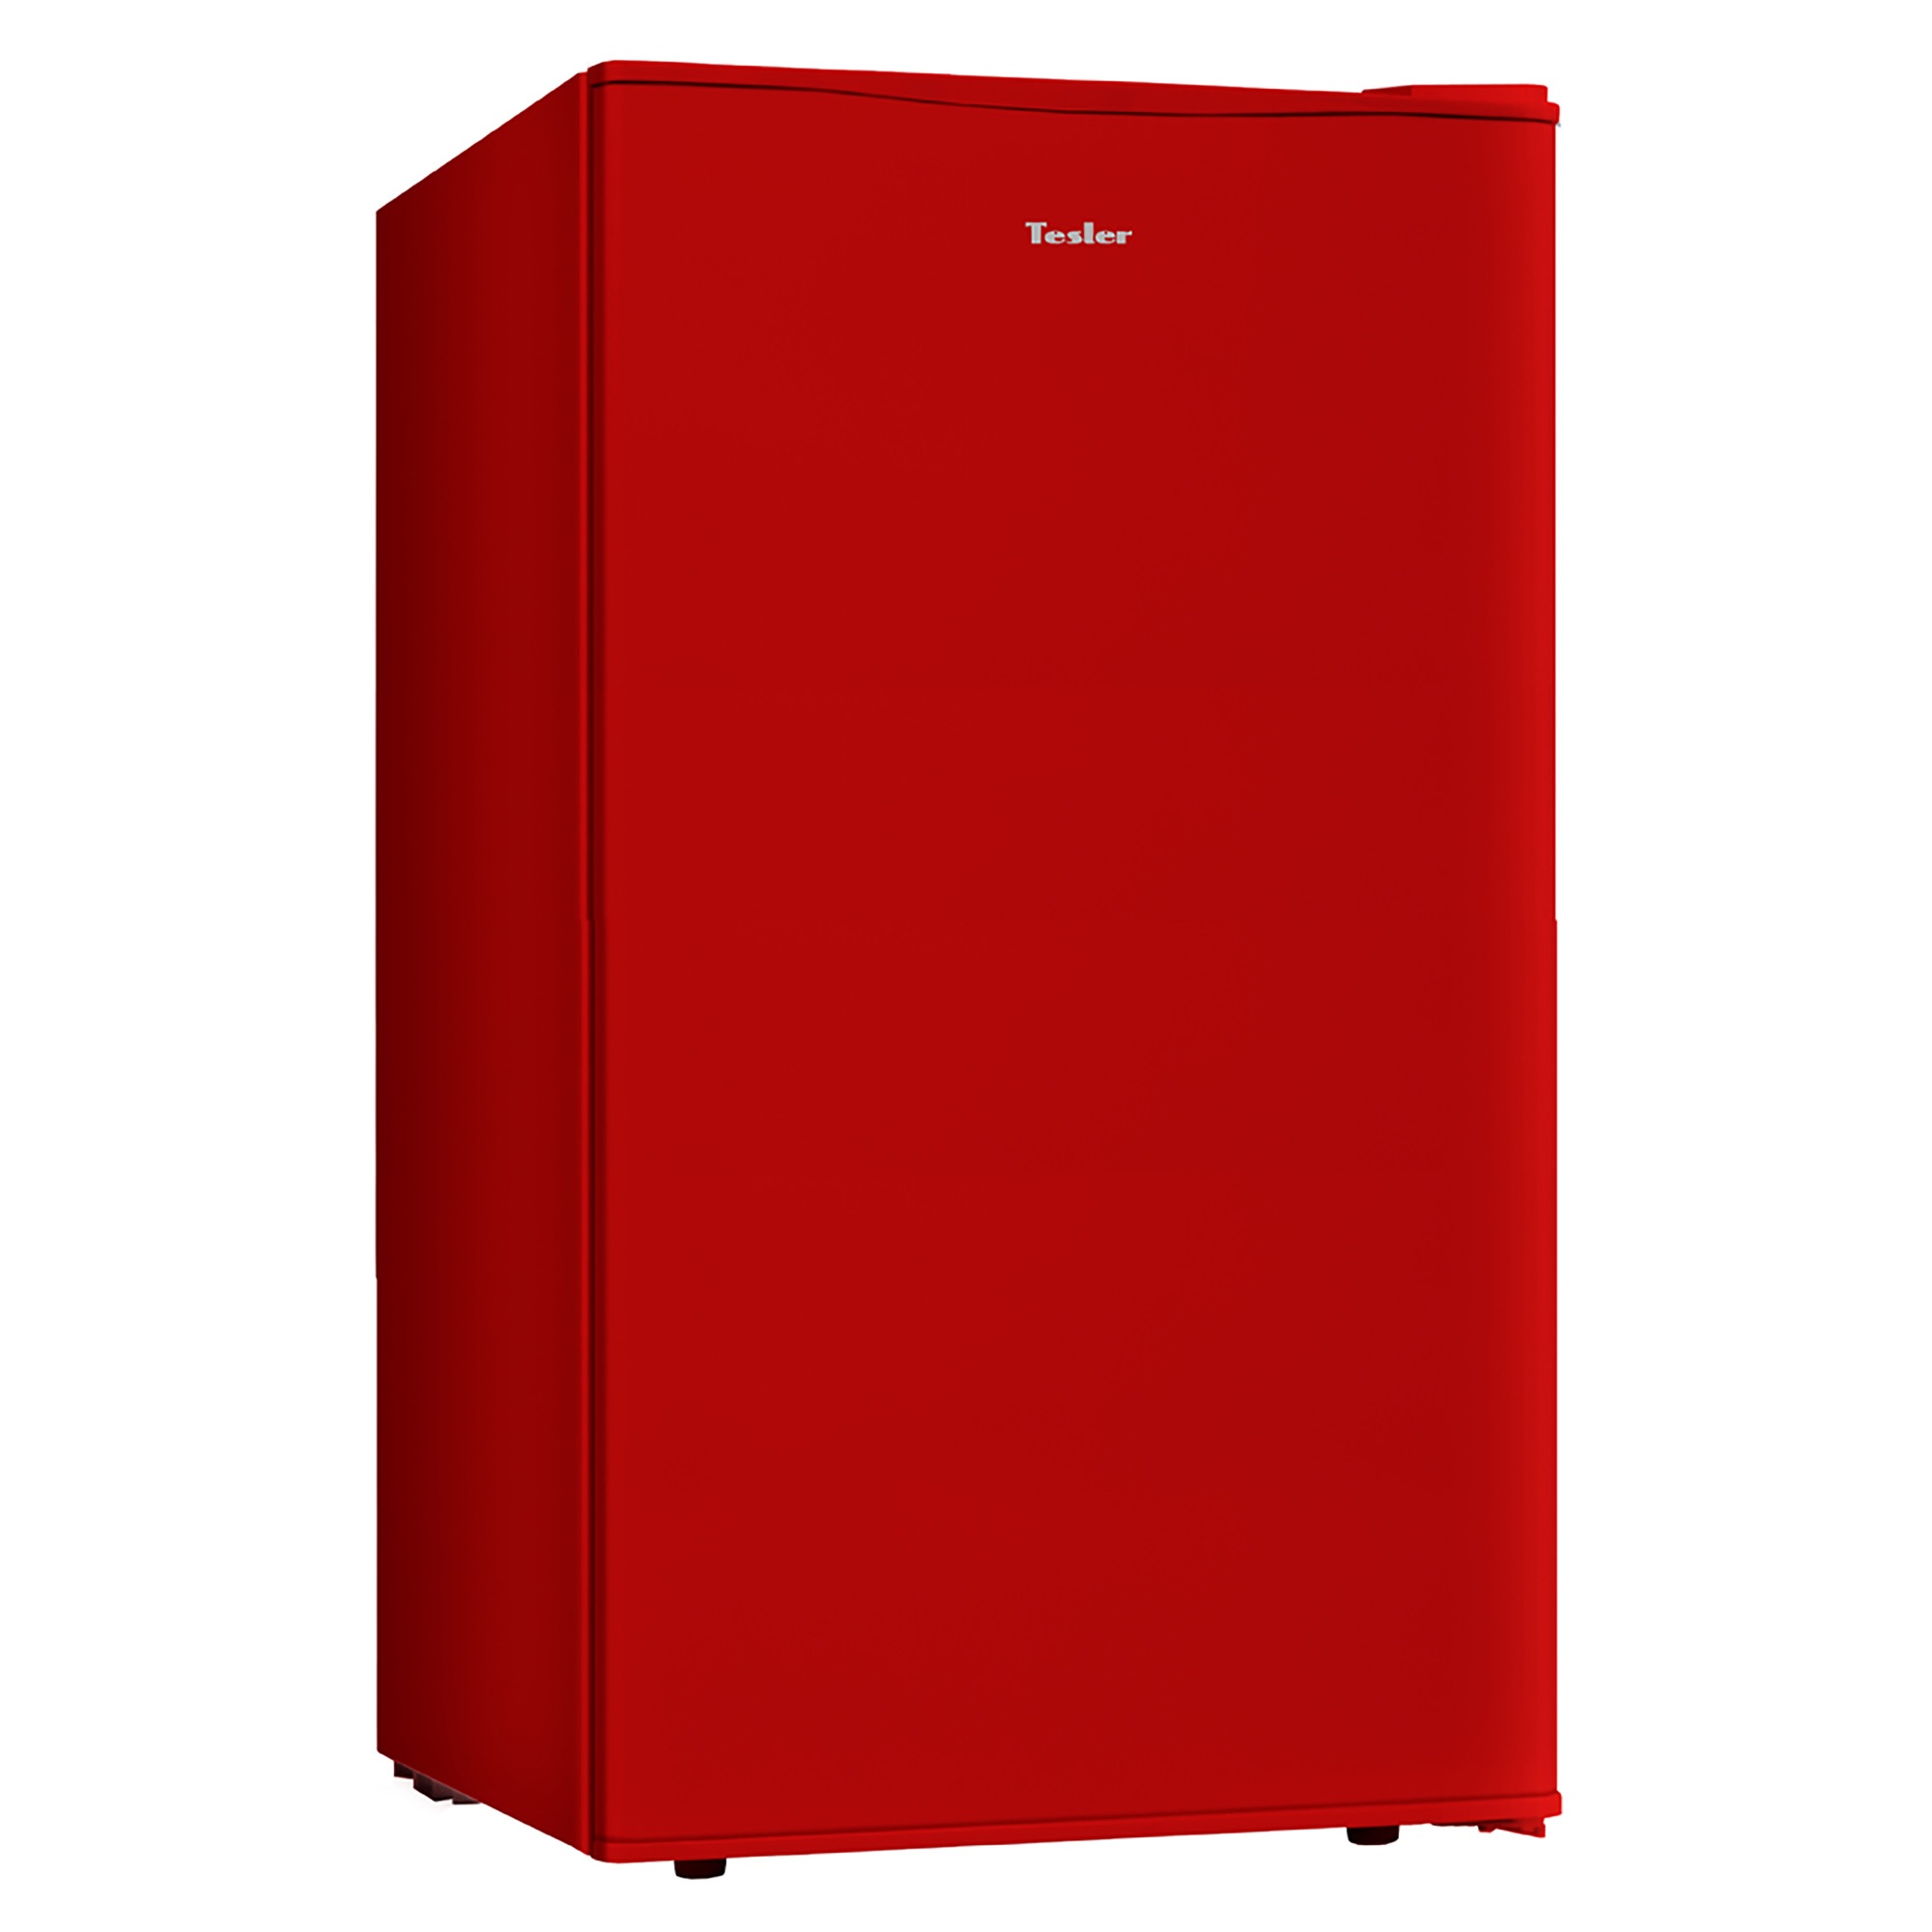 Холодильник TESLER RC-95 красный холодильник tesler rc 73 красный